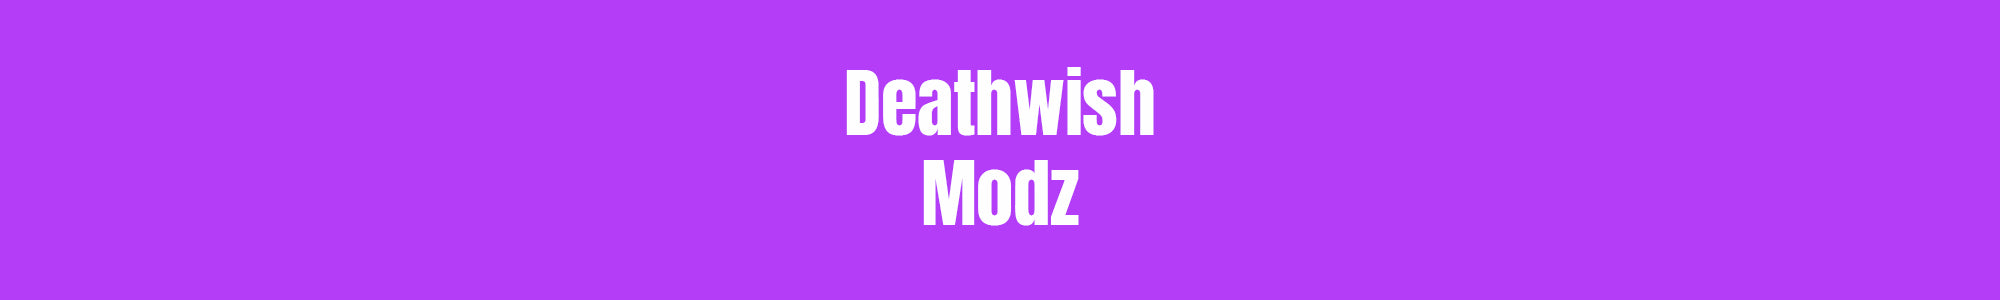 deathwish modz premium rdas and vape kits uk